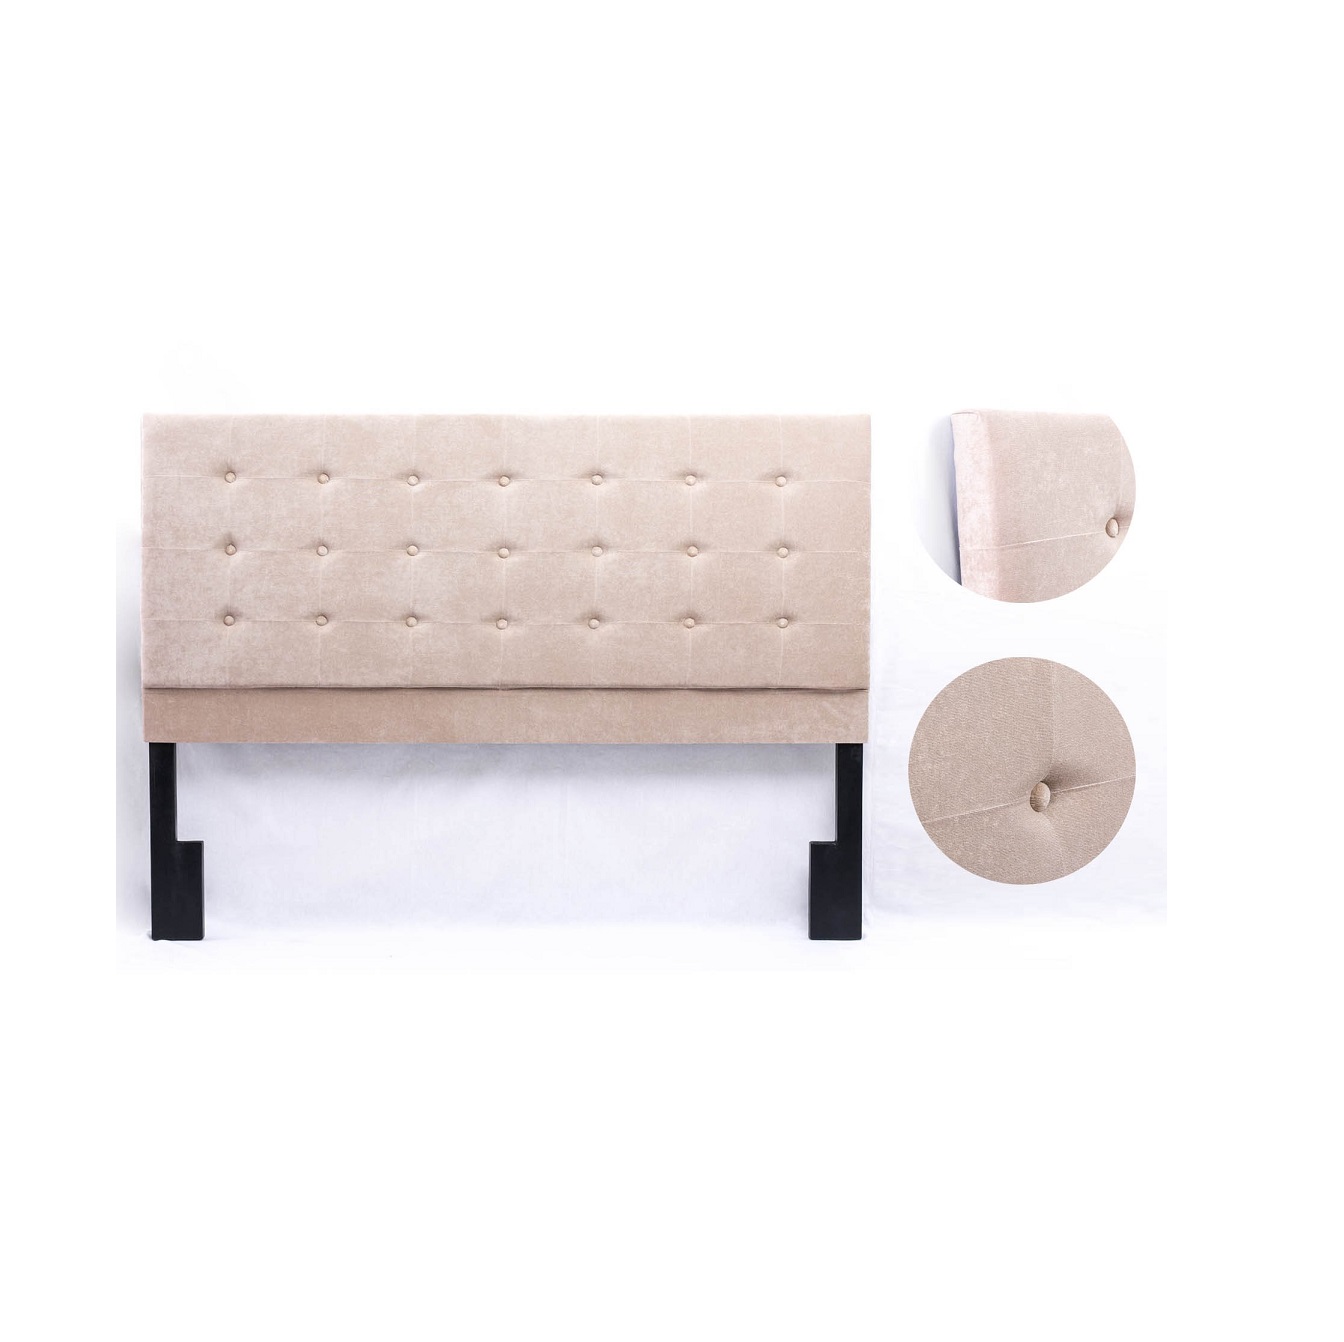 Cabecero de cama tapizado terciopelo Terracota 160 cm